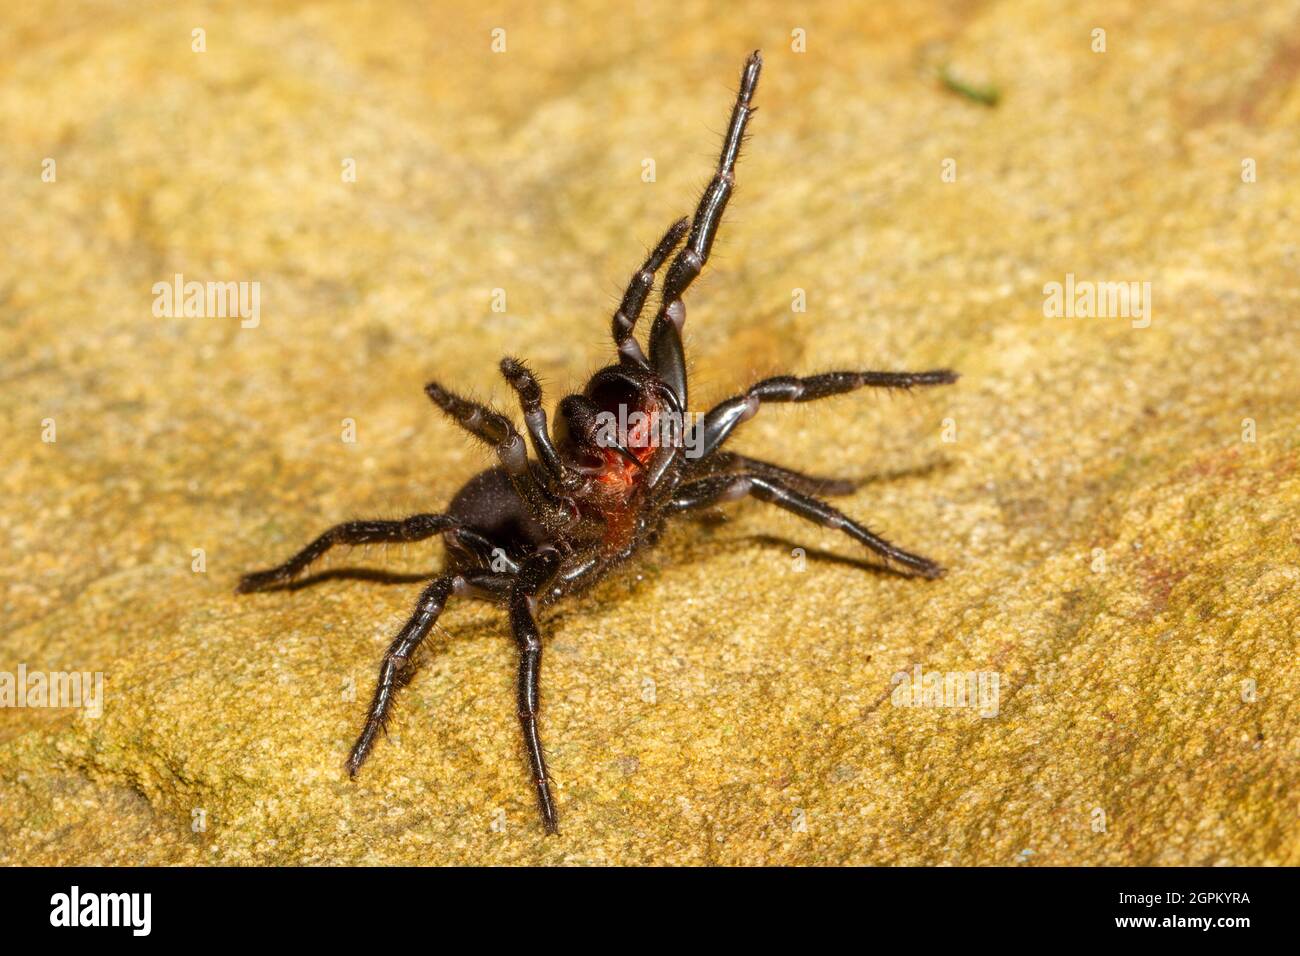 Australian Sydney Funnel Web Spider Banque D'Images